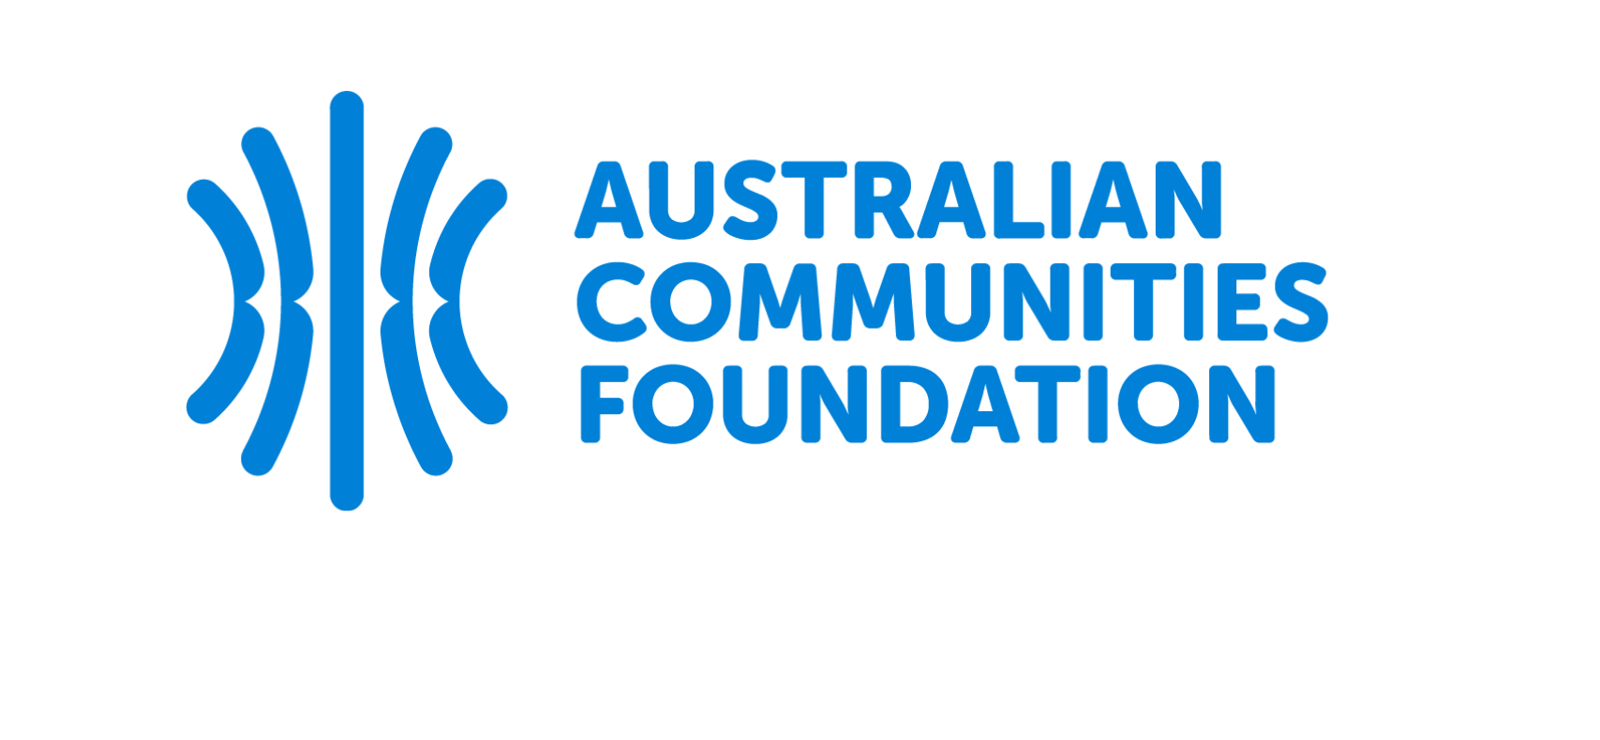 Australian Communities Foundation logo.